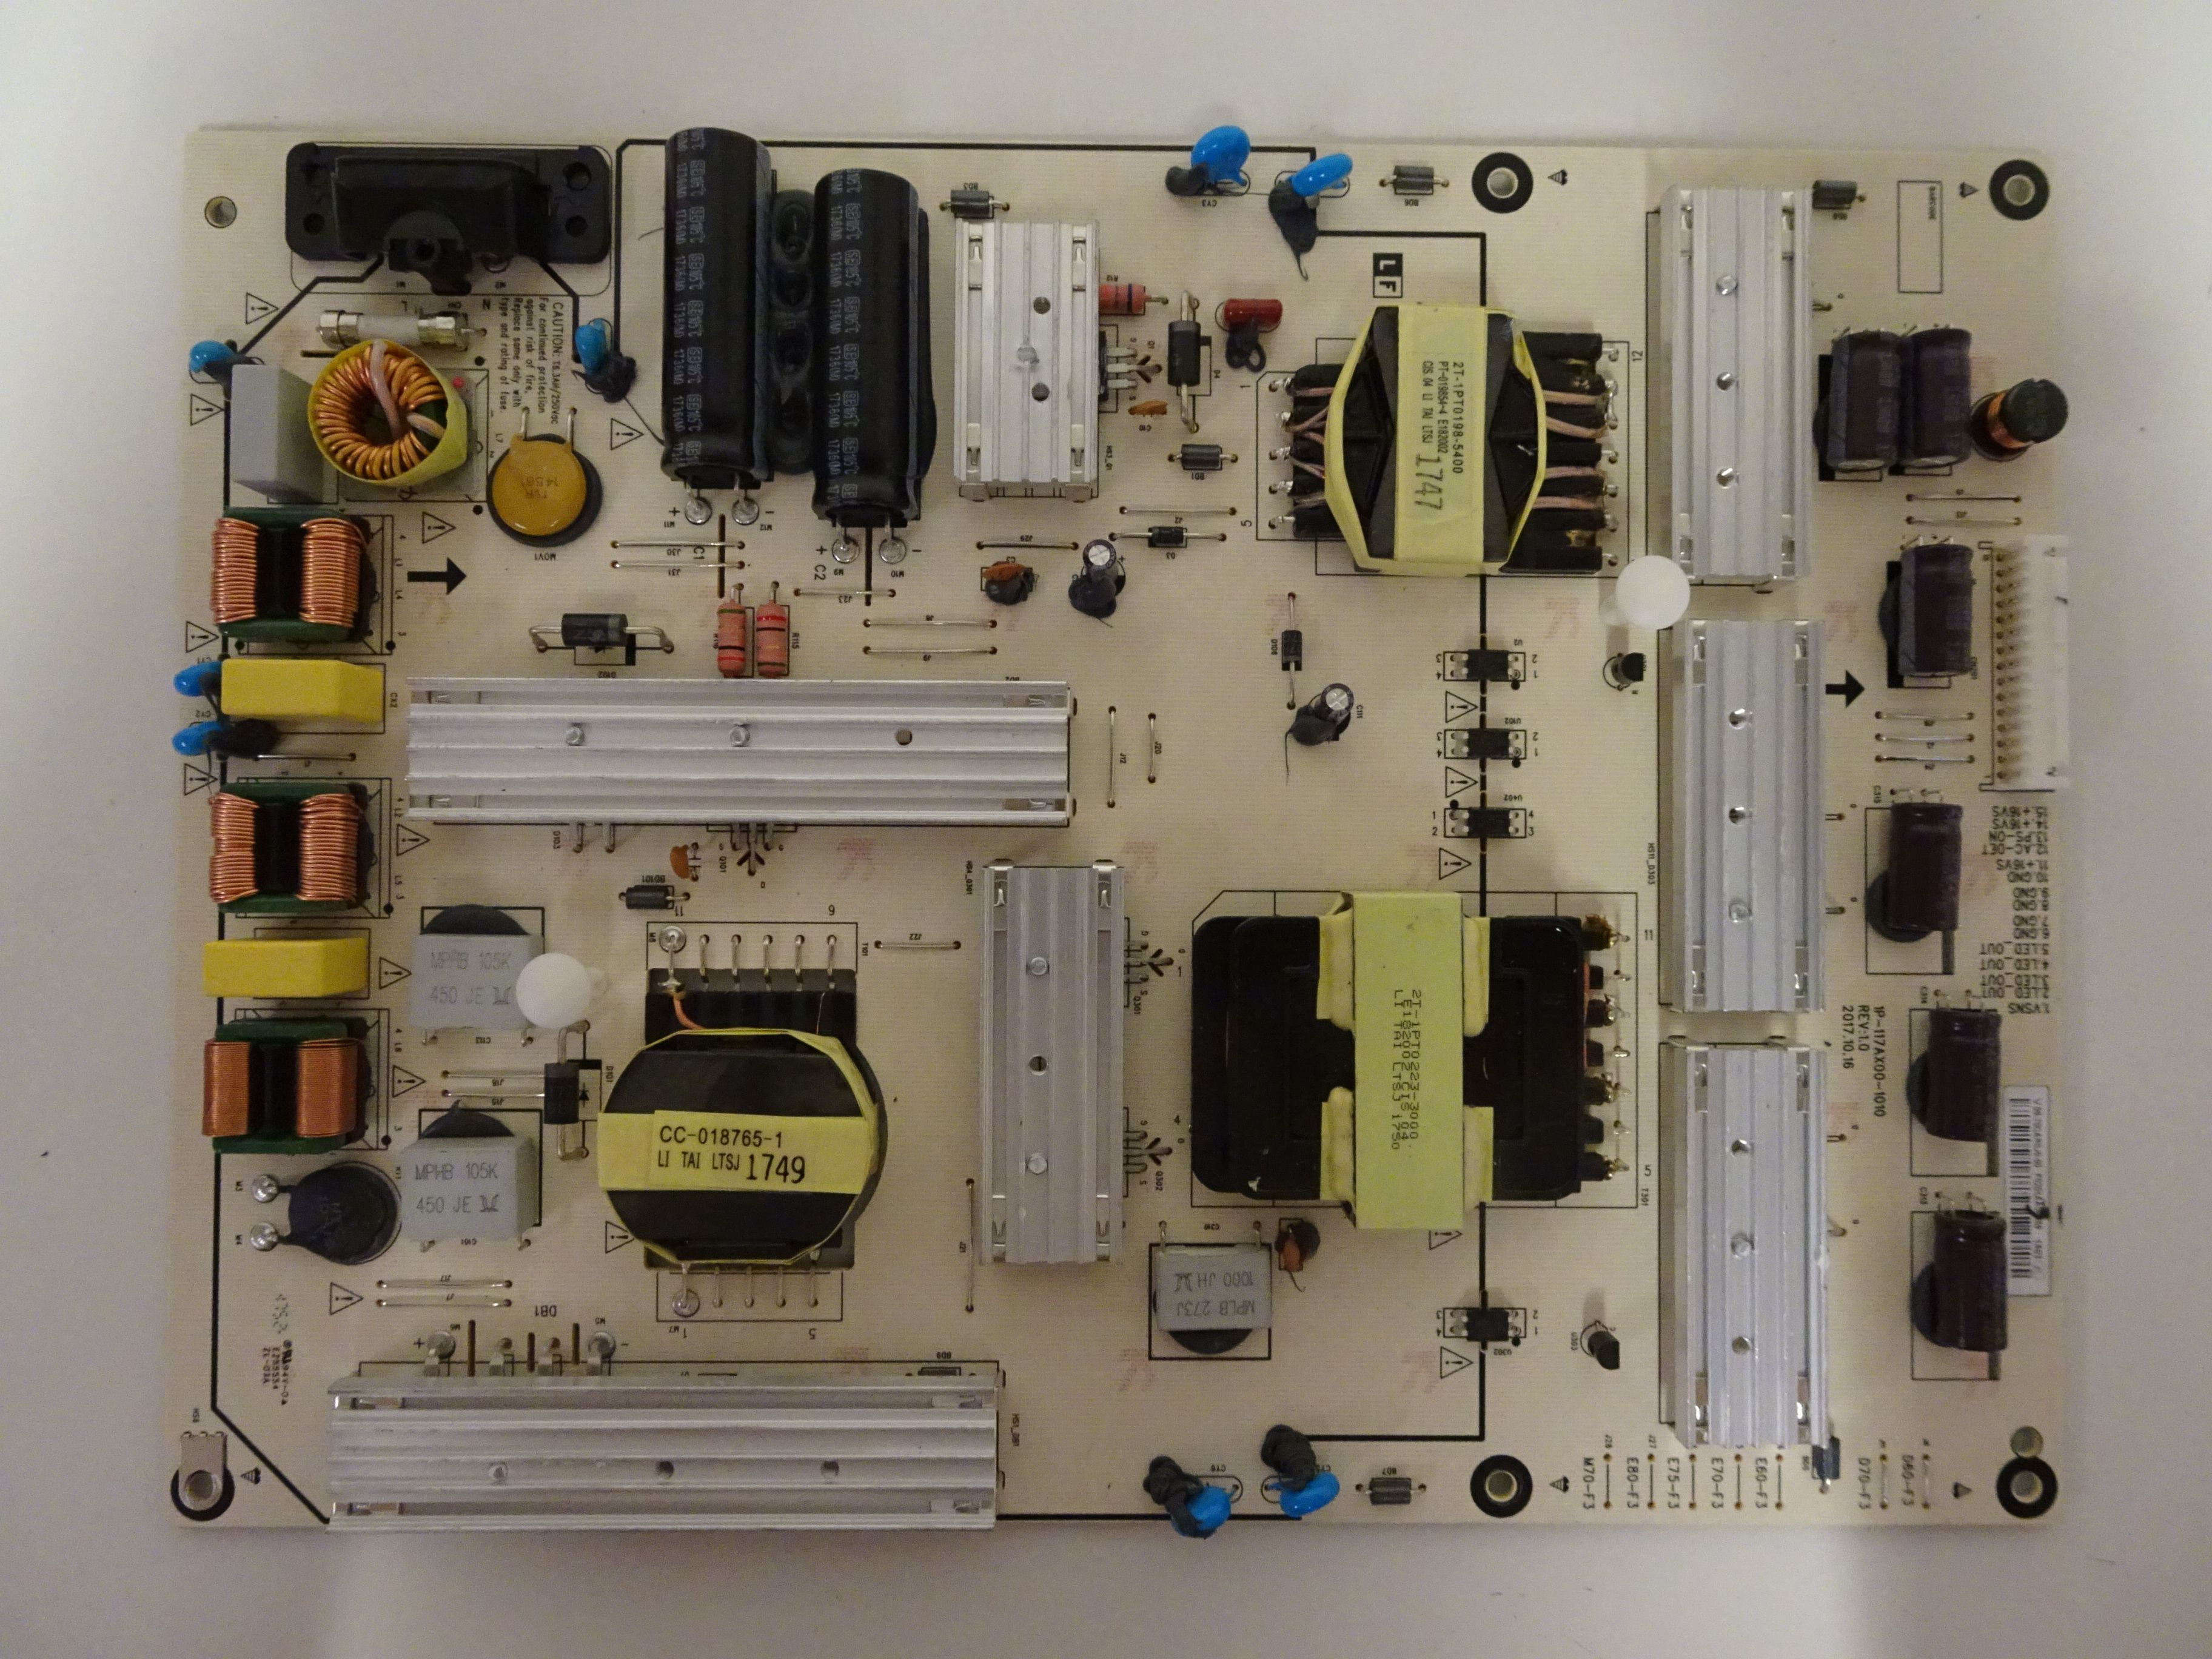 Blue T-CON Complete TV Repair Parts Kit -Version 2 Vizio D650I-B2 See Note!